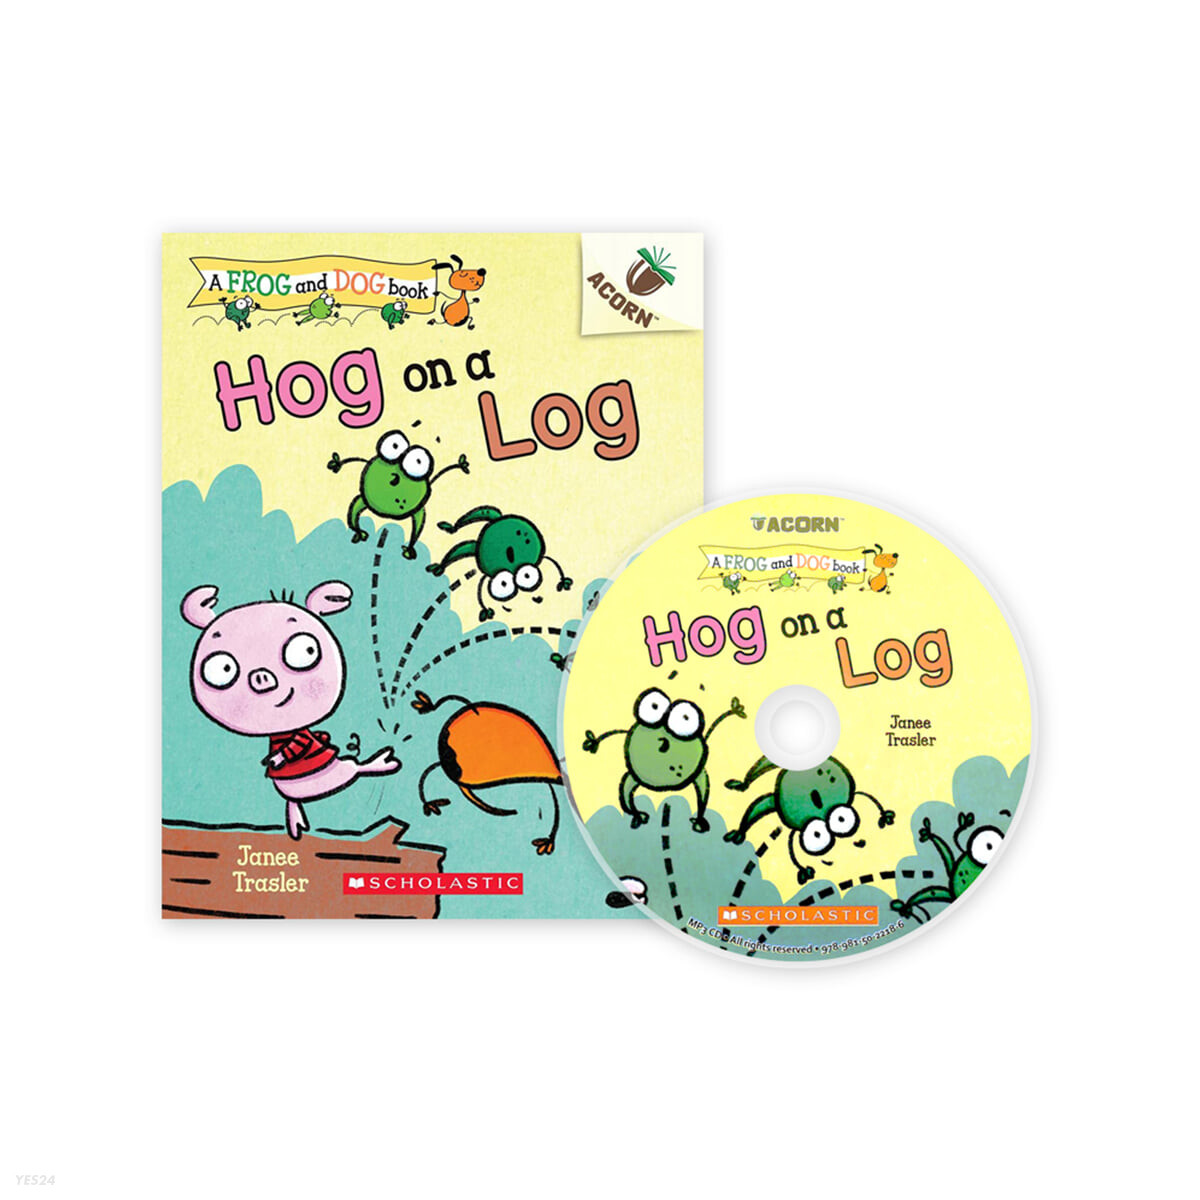 Hog on a log